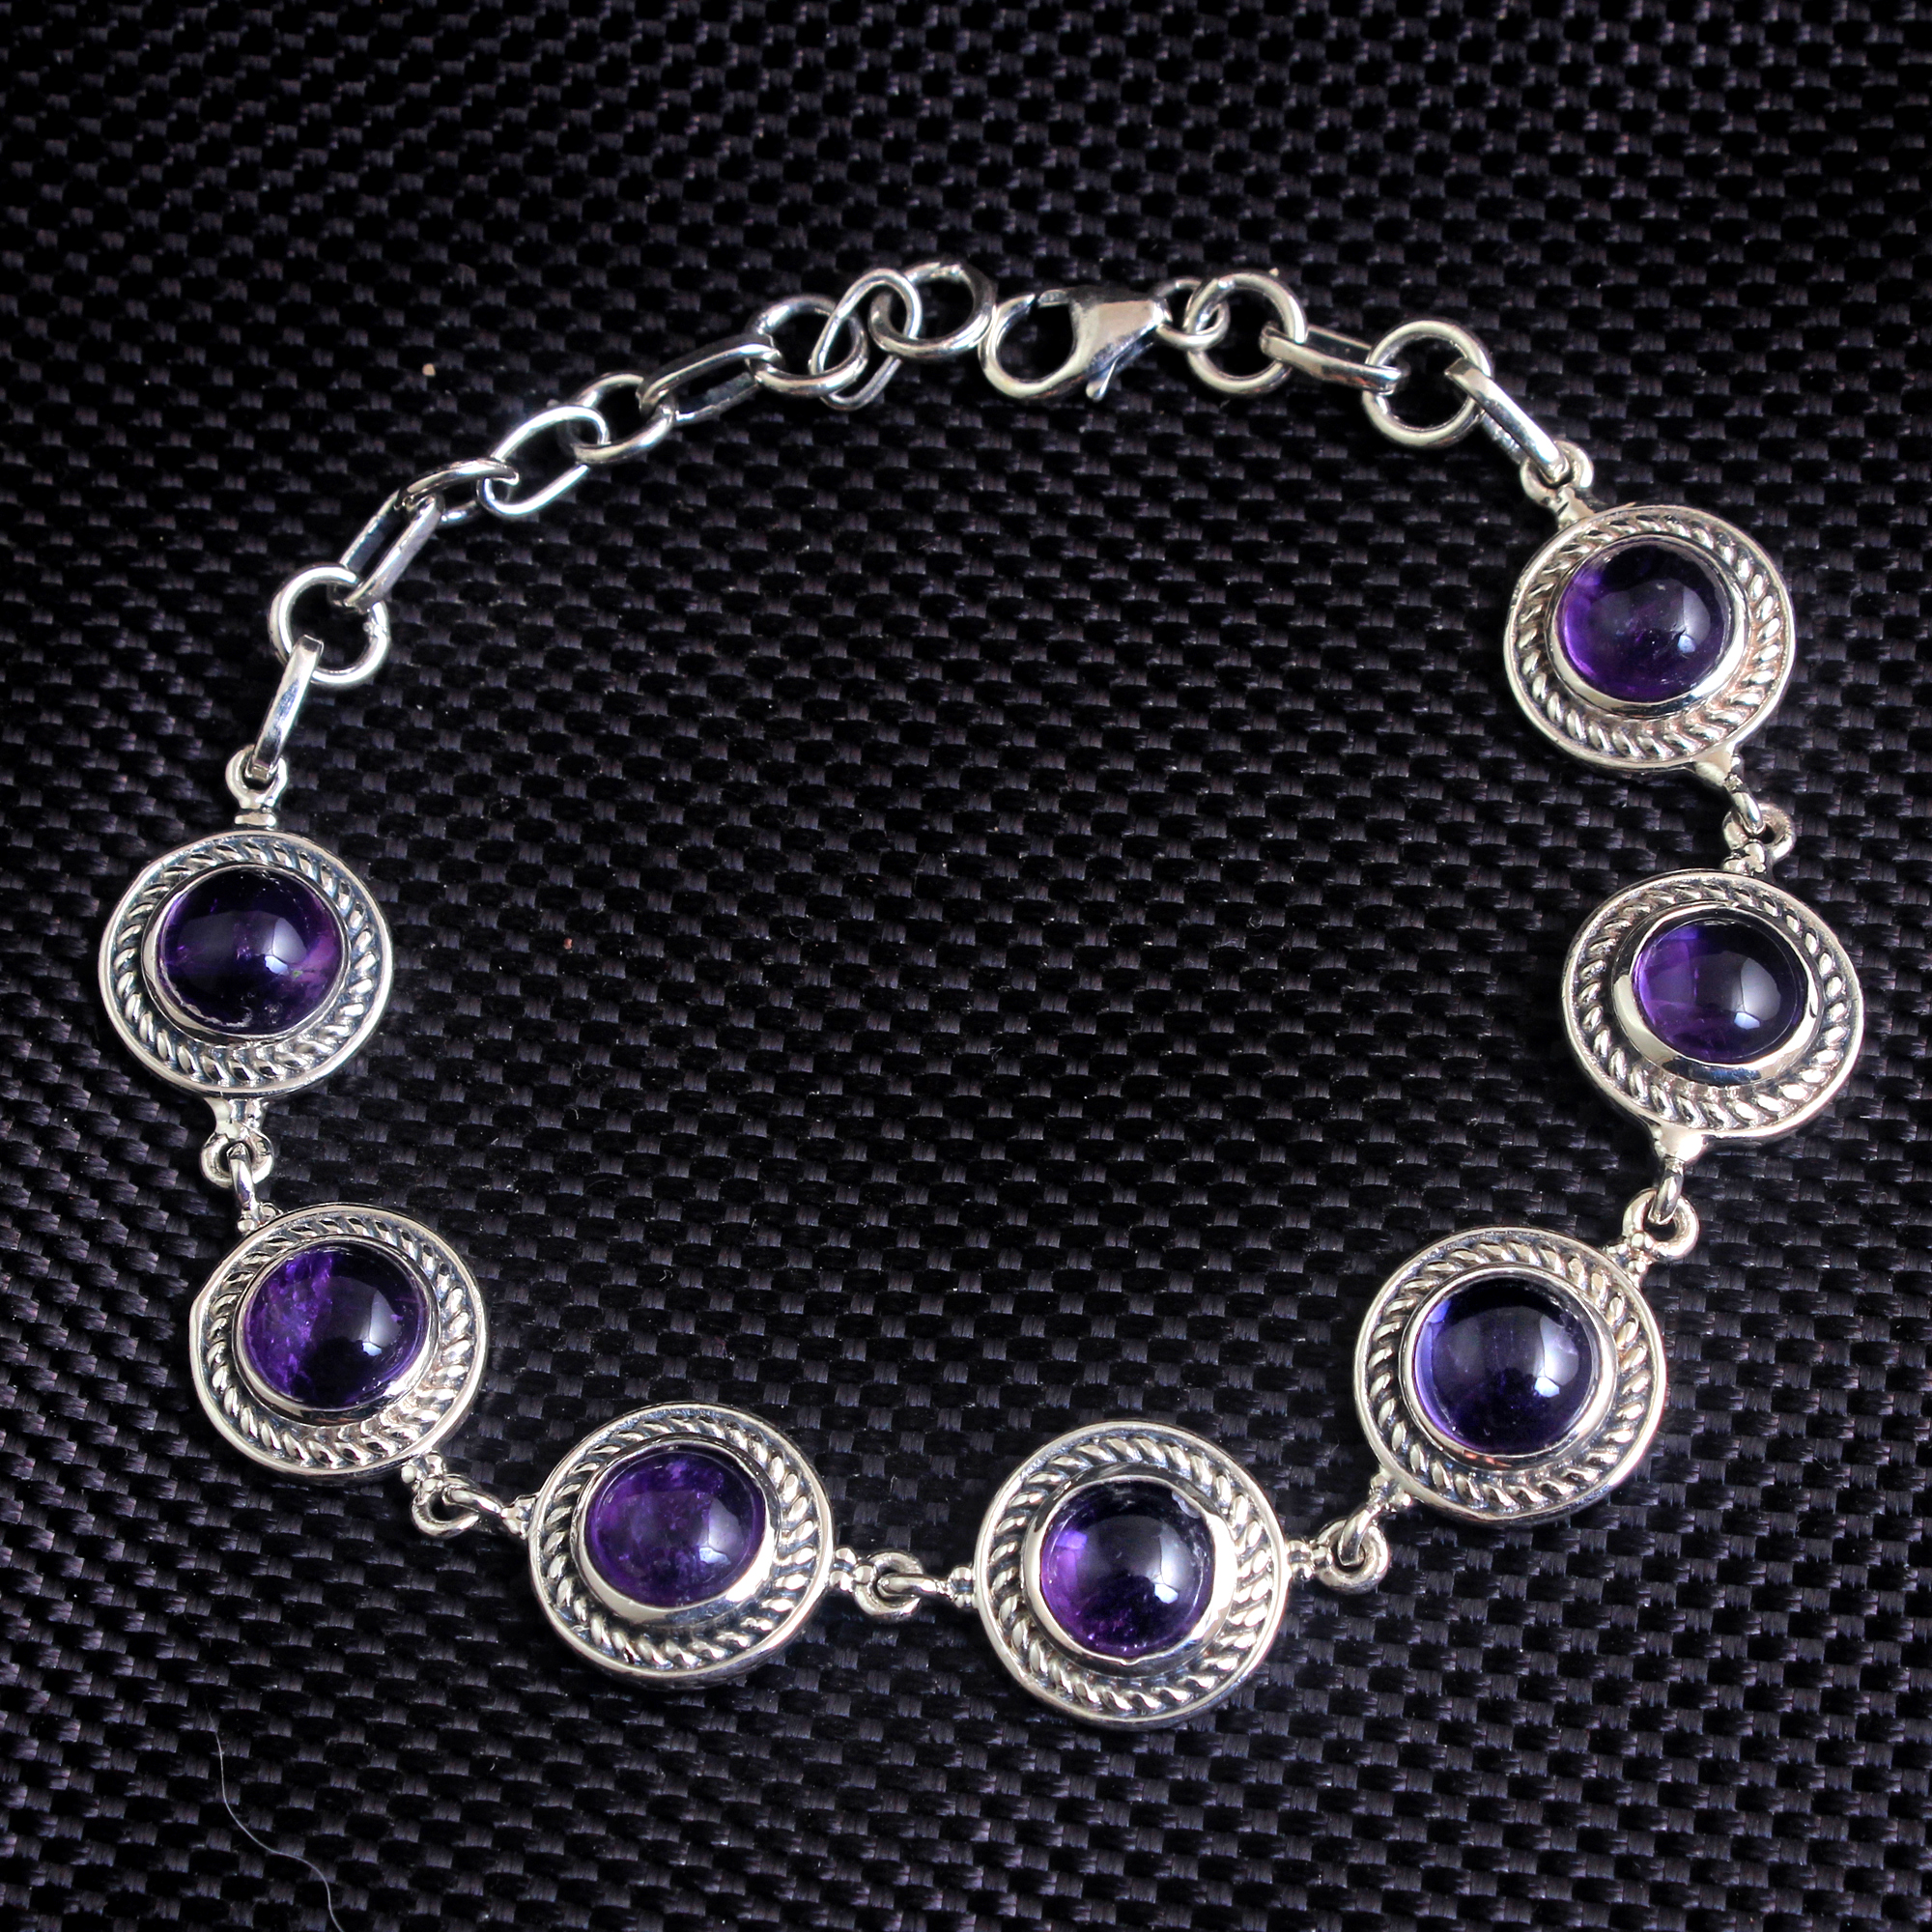 Ashion Jewelry Gift For Her Handmade Jewelry Silver Jewelry Statement Jewelry Unisex Jewelry